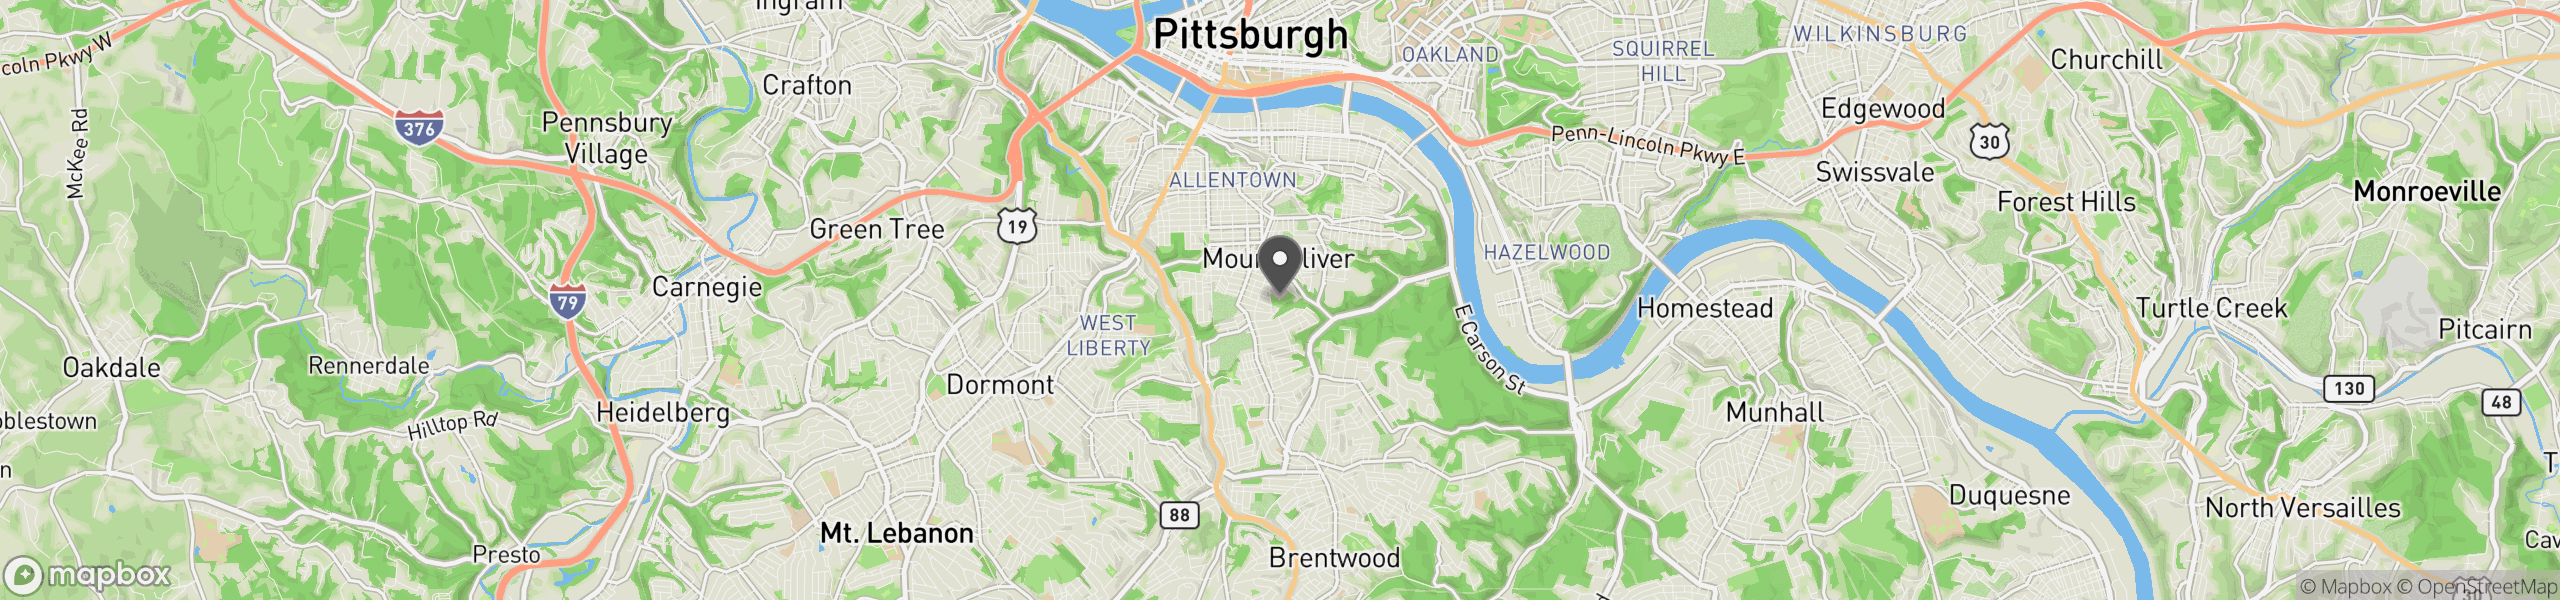 Pittsburgh, PA 15210